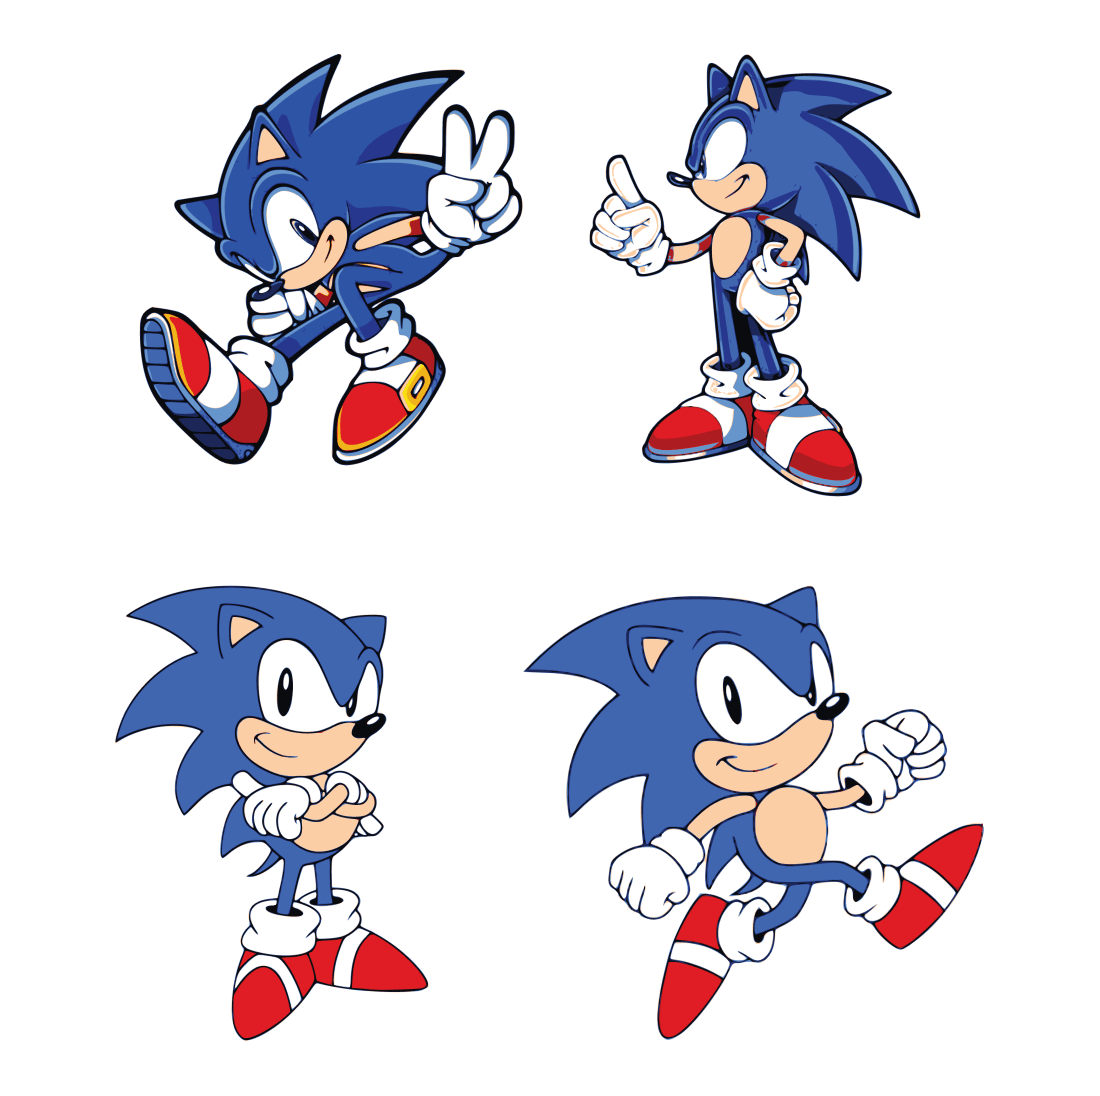 Blue Sonic smiles at those around him.